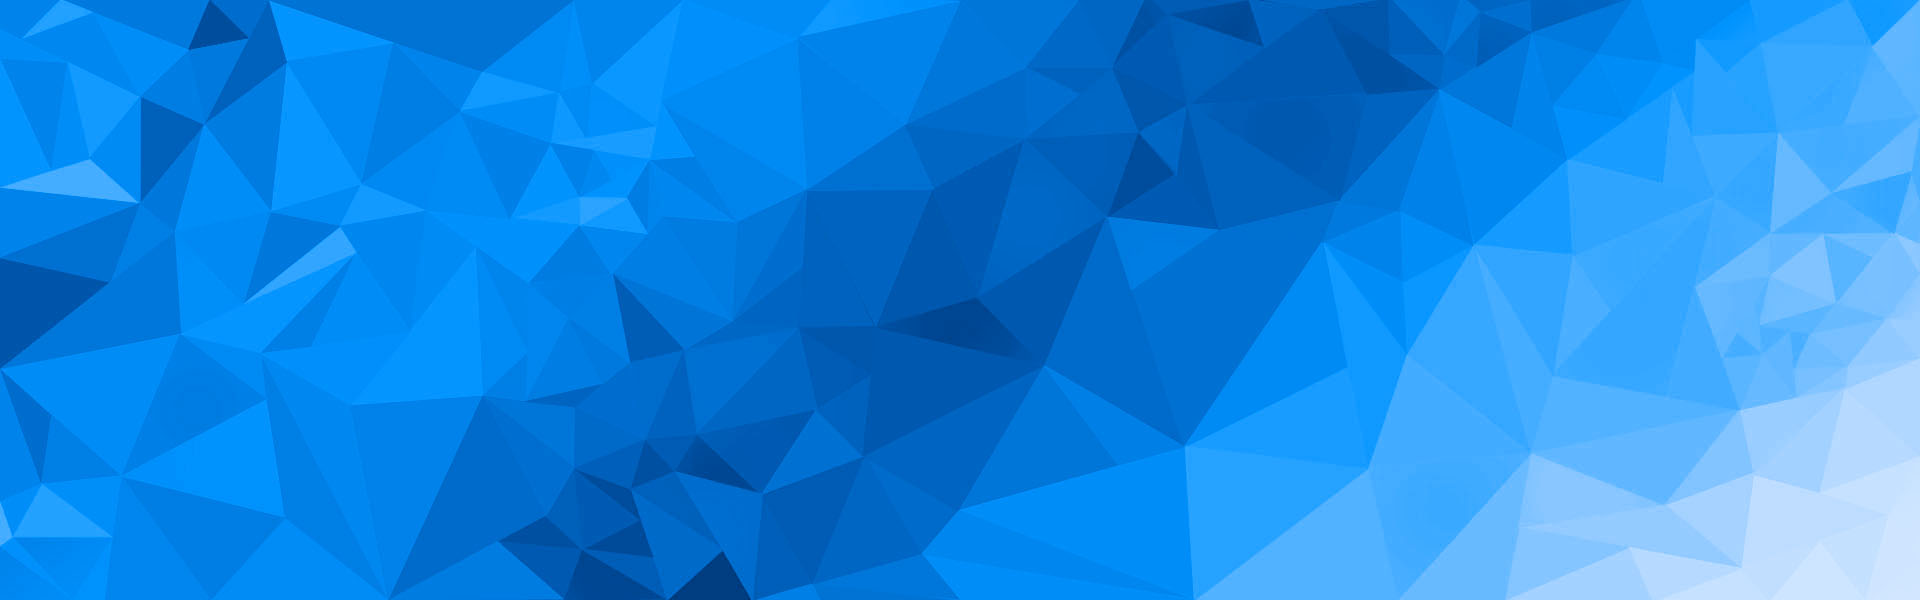 Blau gefärbtes Polygon Muster